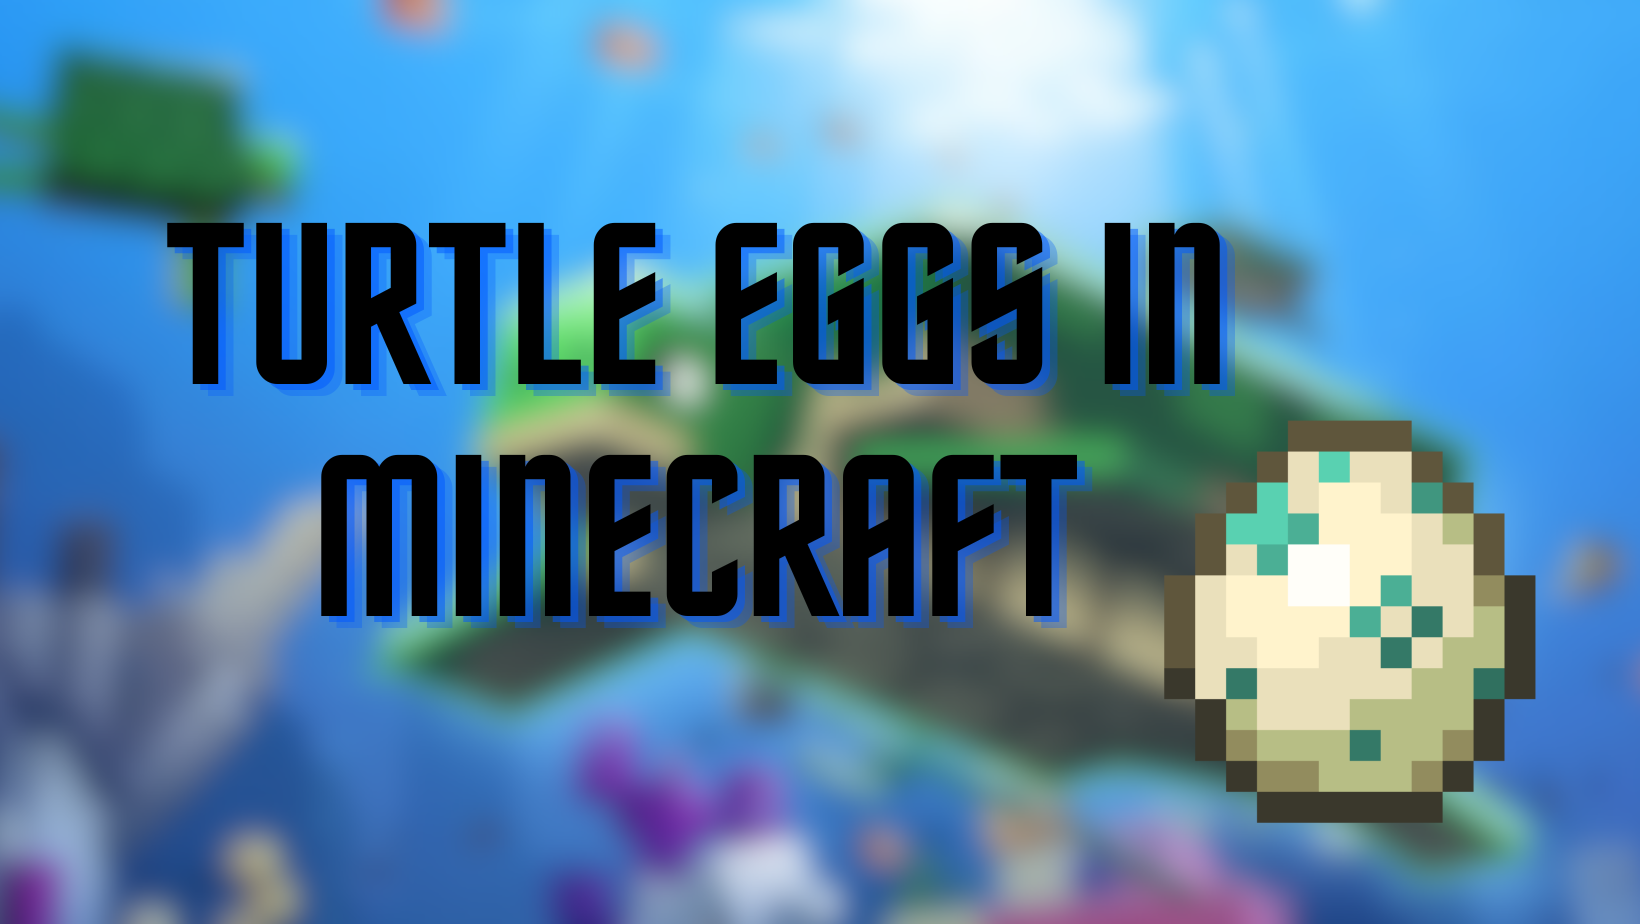 turtle eggs in minecraft